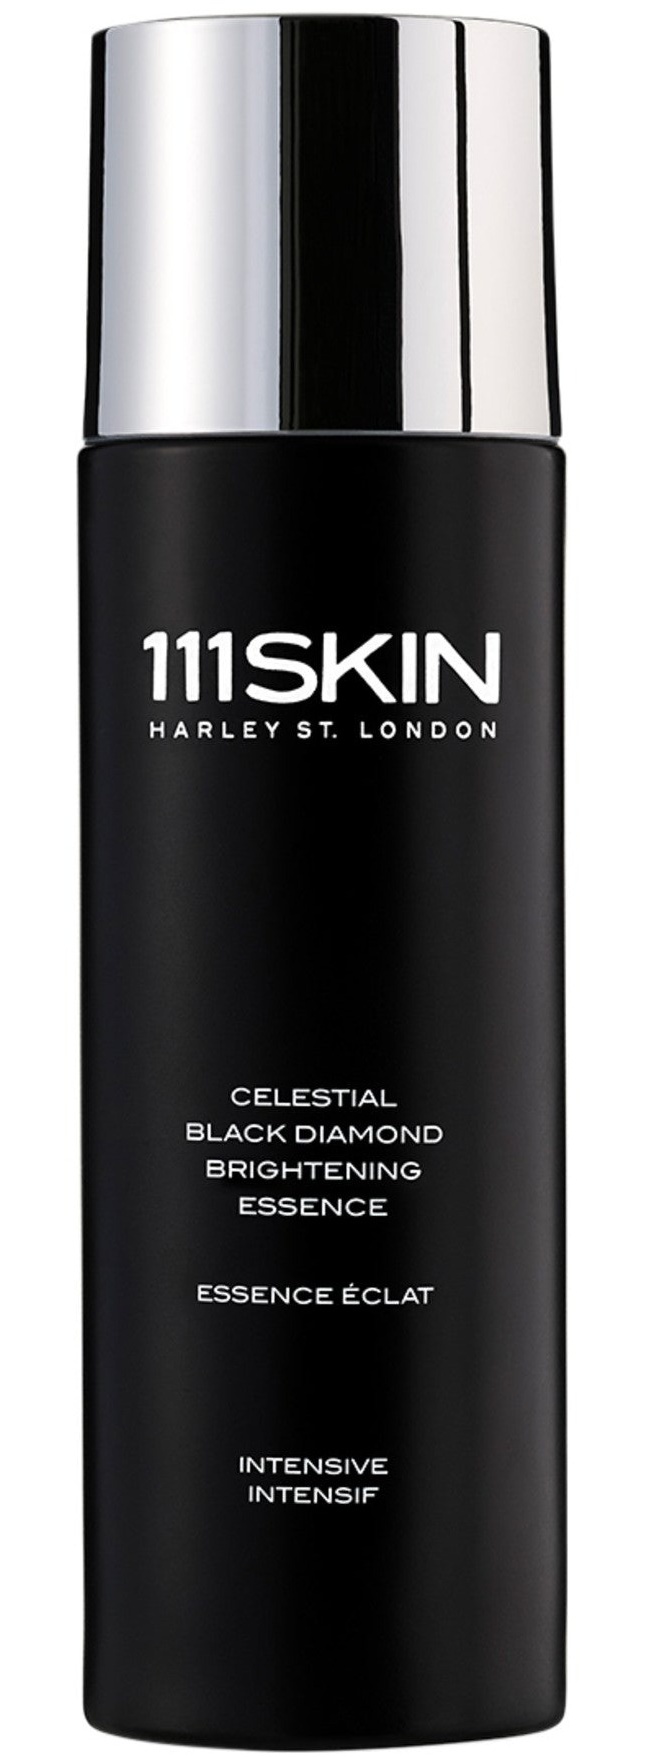 111SKIN Celestial Black Diamond Brightening Essence